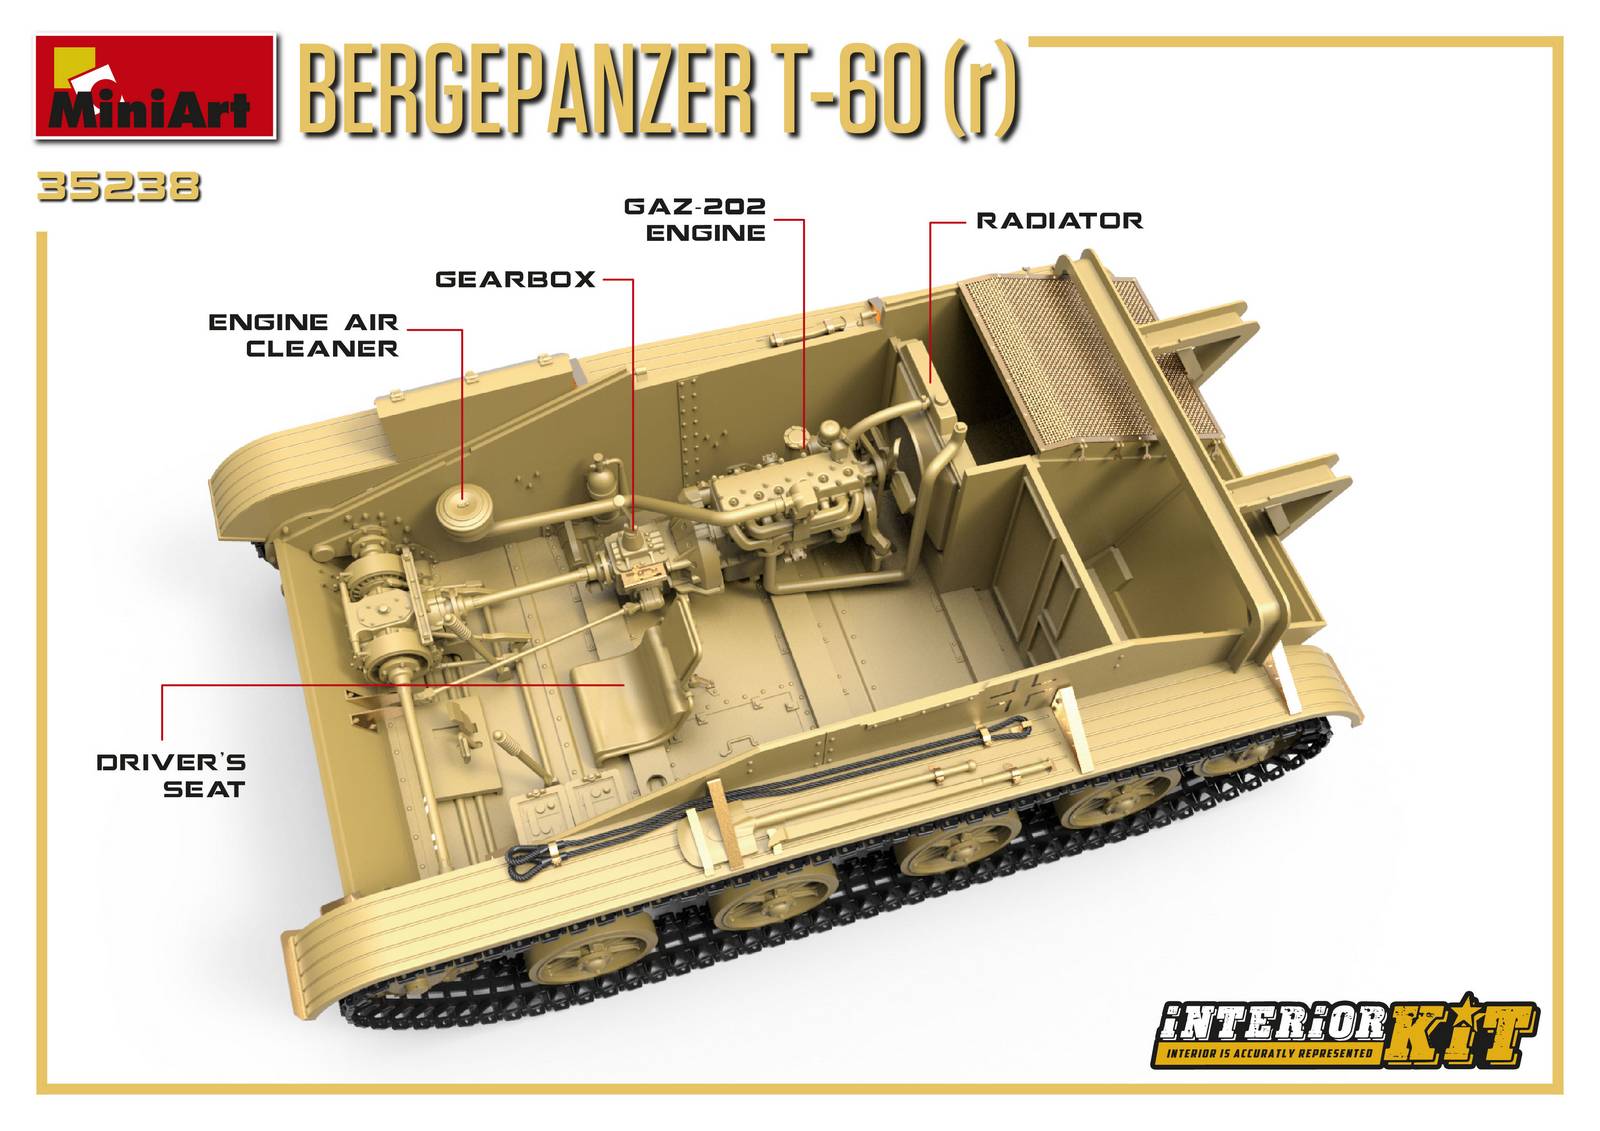 1/35 BERGEPANZER T-60 ( r ) INTERIOR KIT 35238